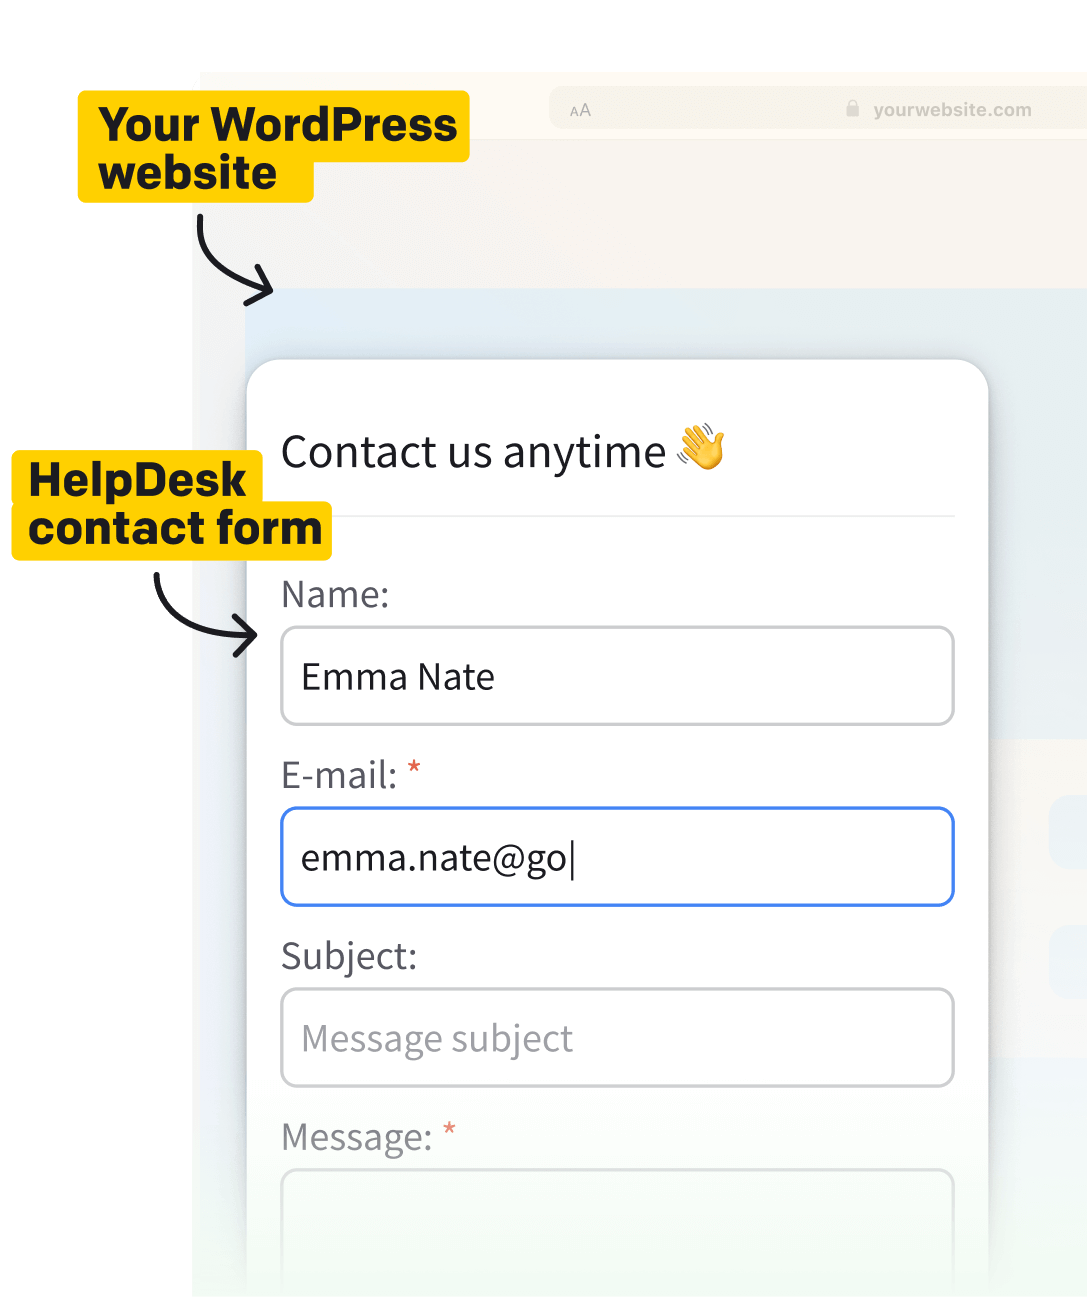 HelpDesk contact form in WordPress